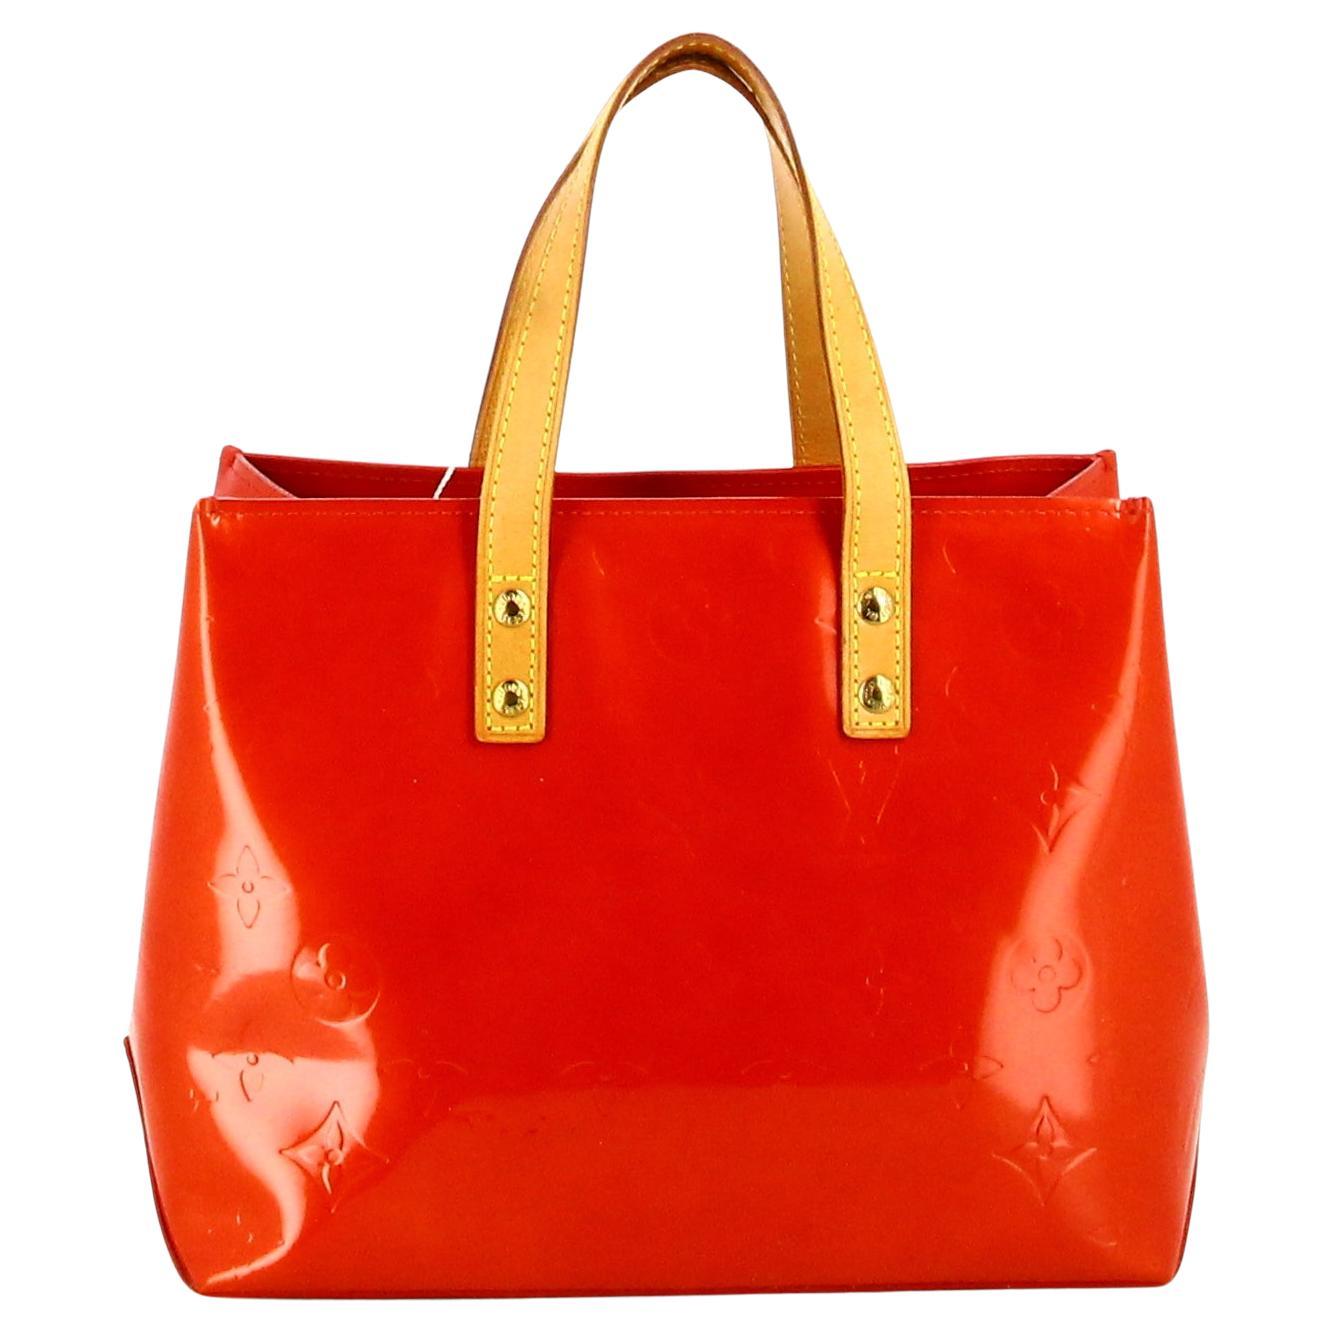 2003 Louis Vuitton Monogram Red Vernis Handbag For Sale